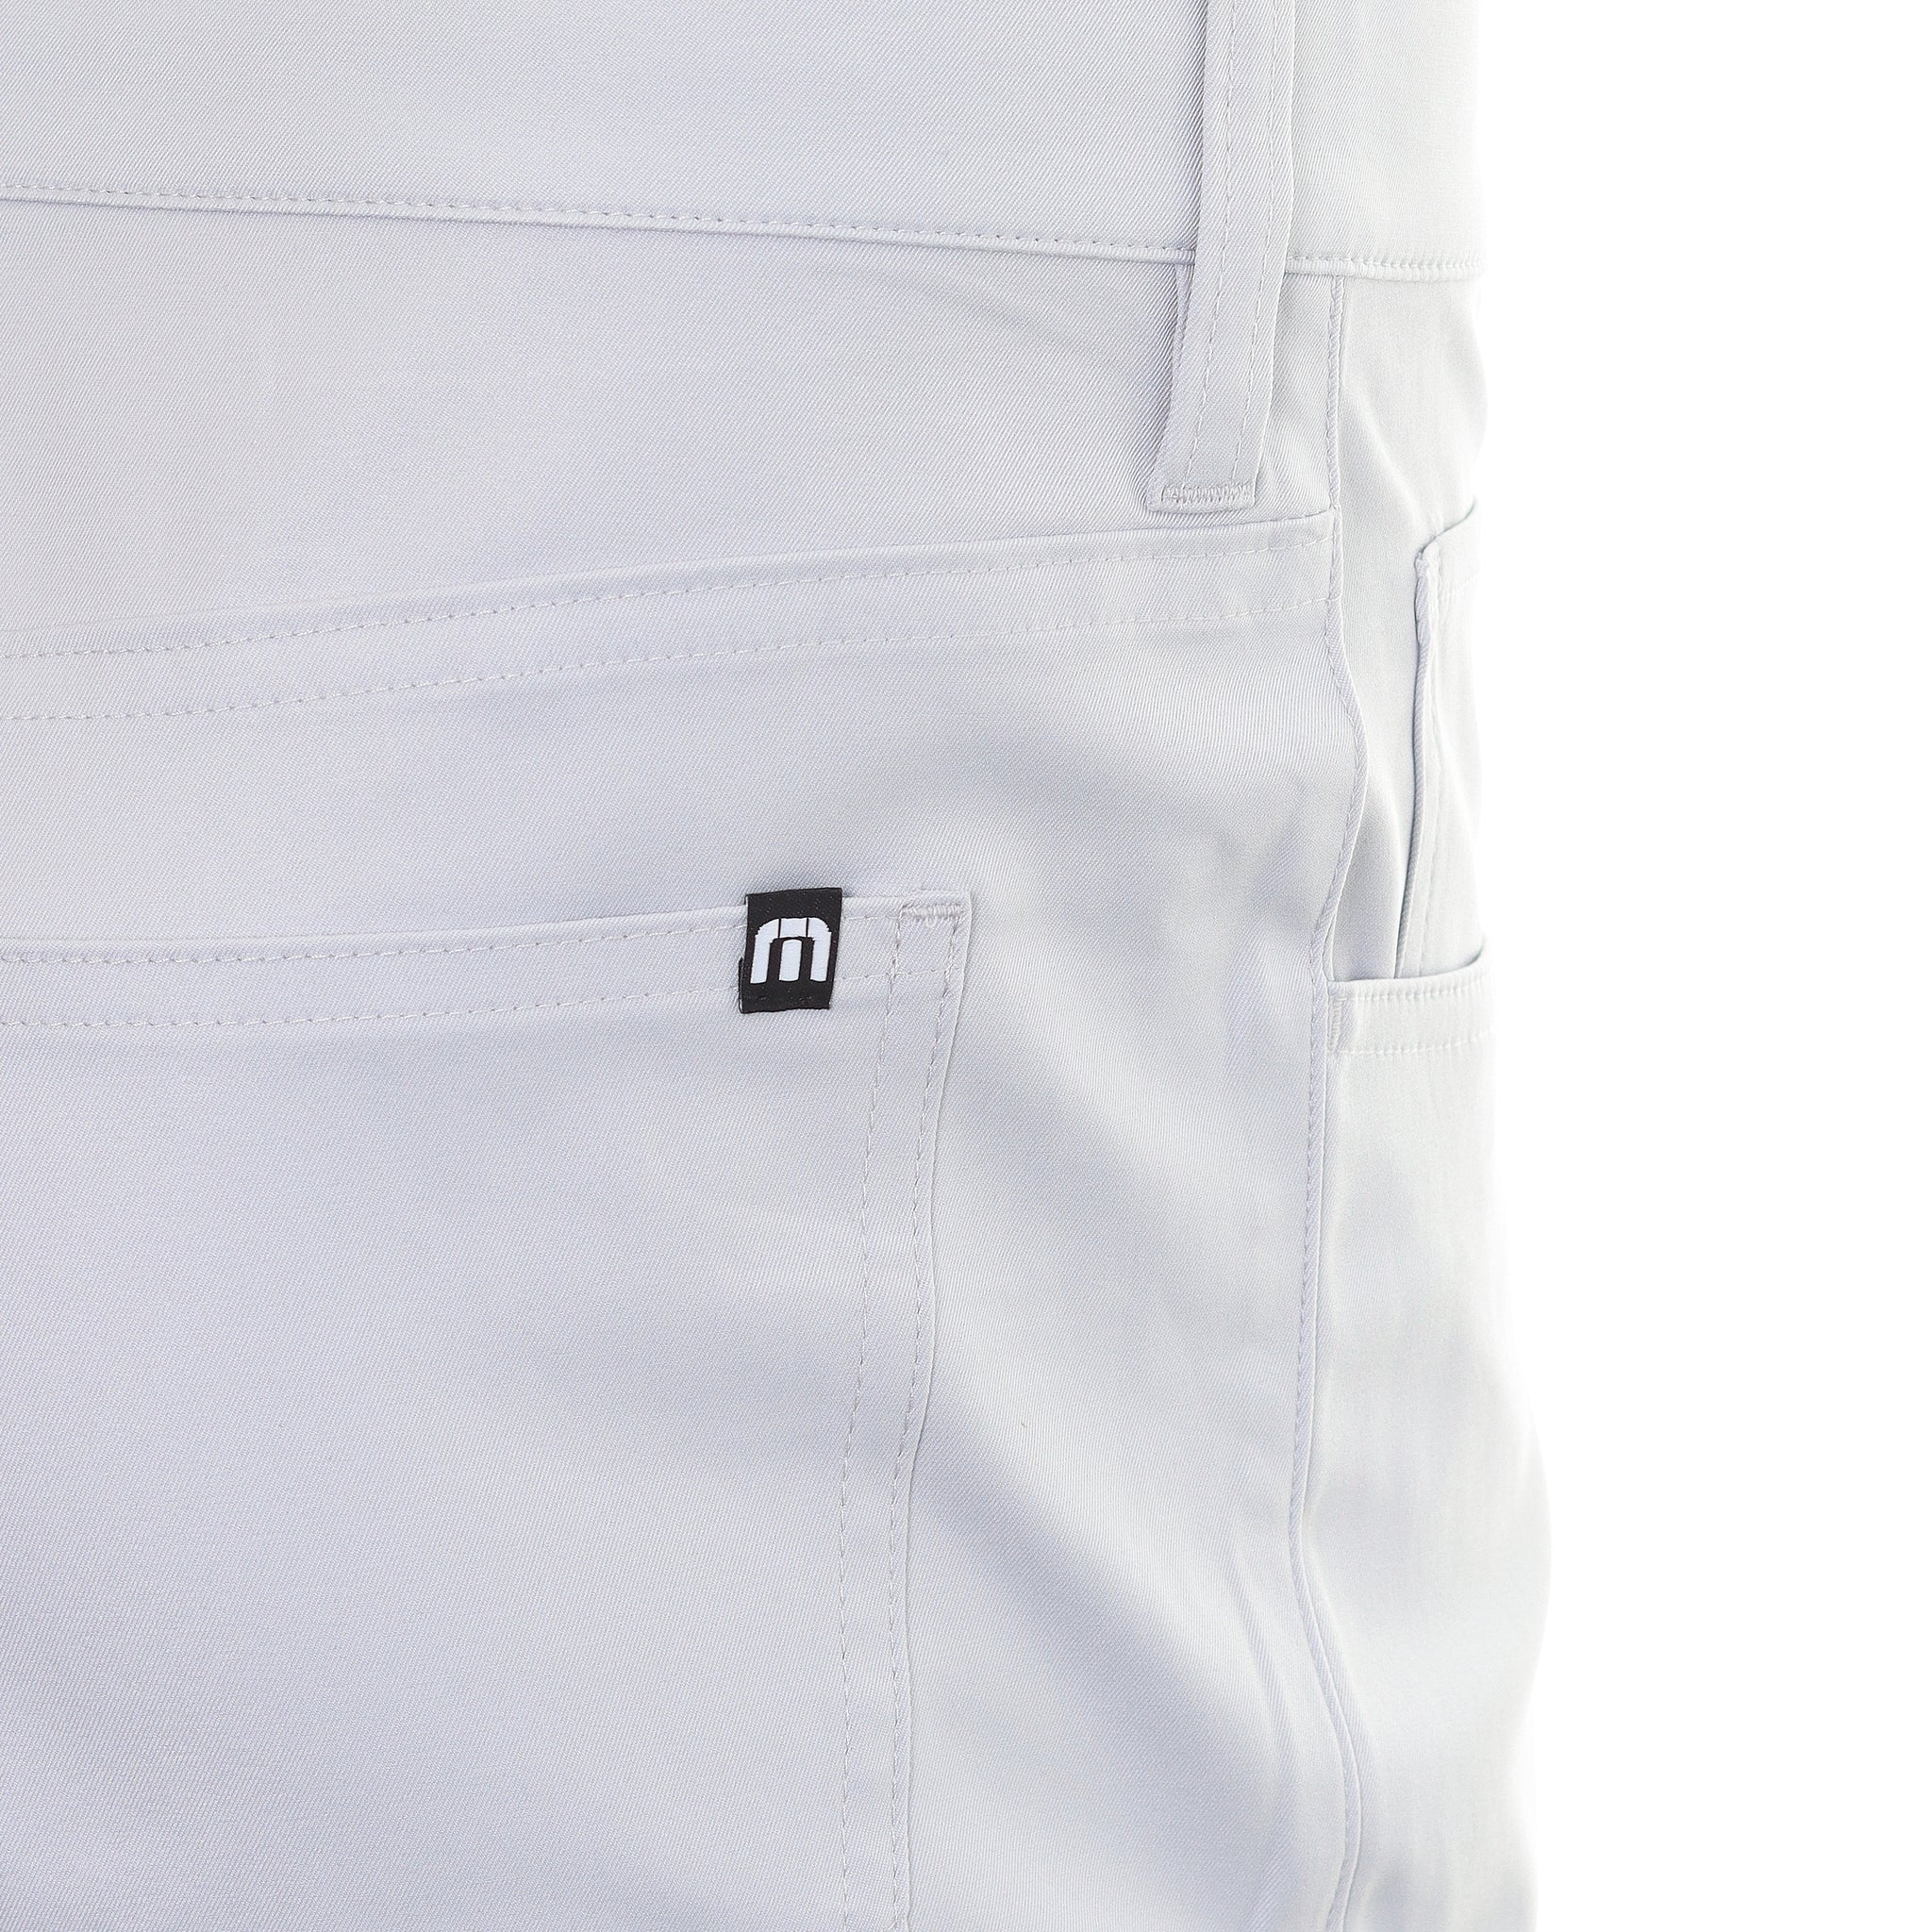 travismathew-open-to-close-trousers-1mt435-microchip